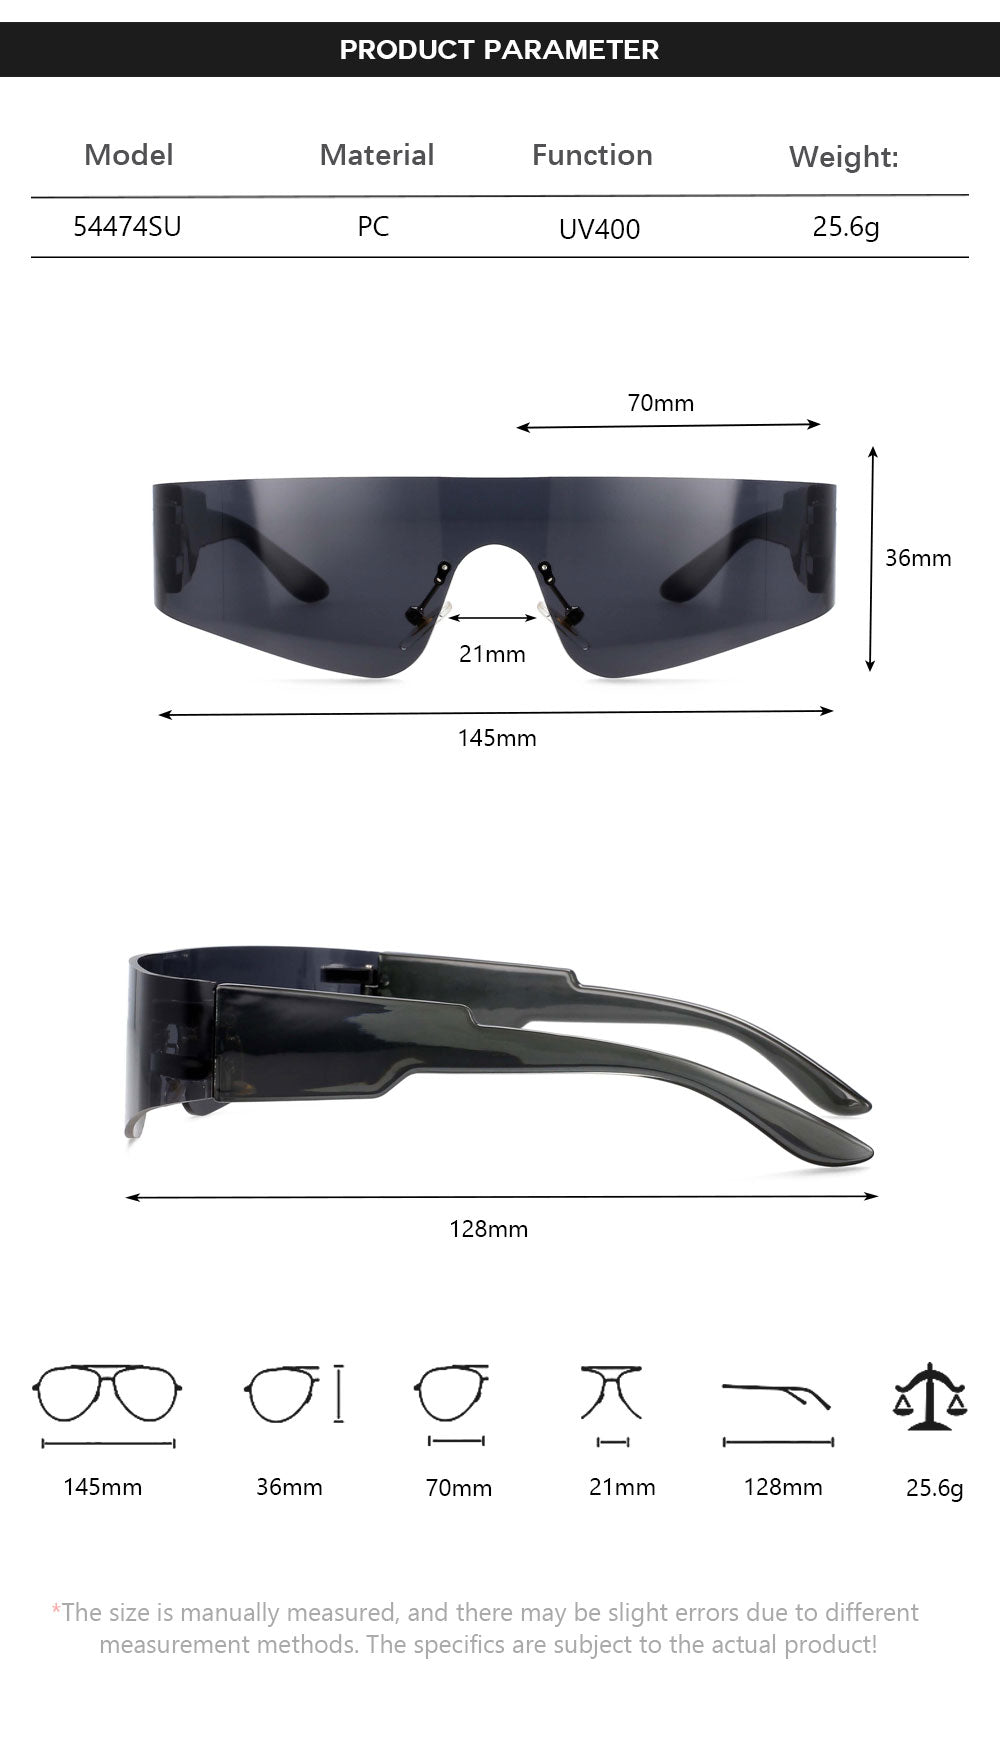 CCSpace Unisex Rimless Rectangle Goggle Resin One Lens Frame Sunglasses 54474 Sunglasses CCspace Sunglasses   